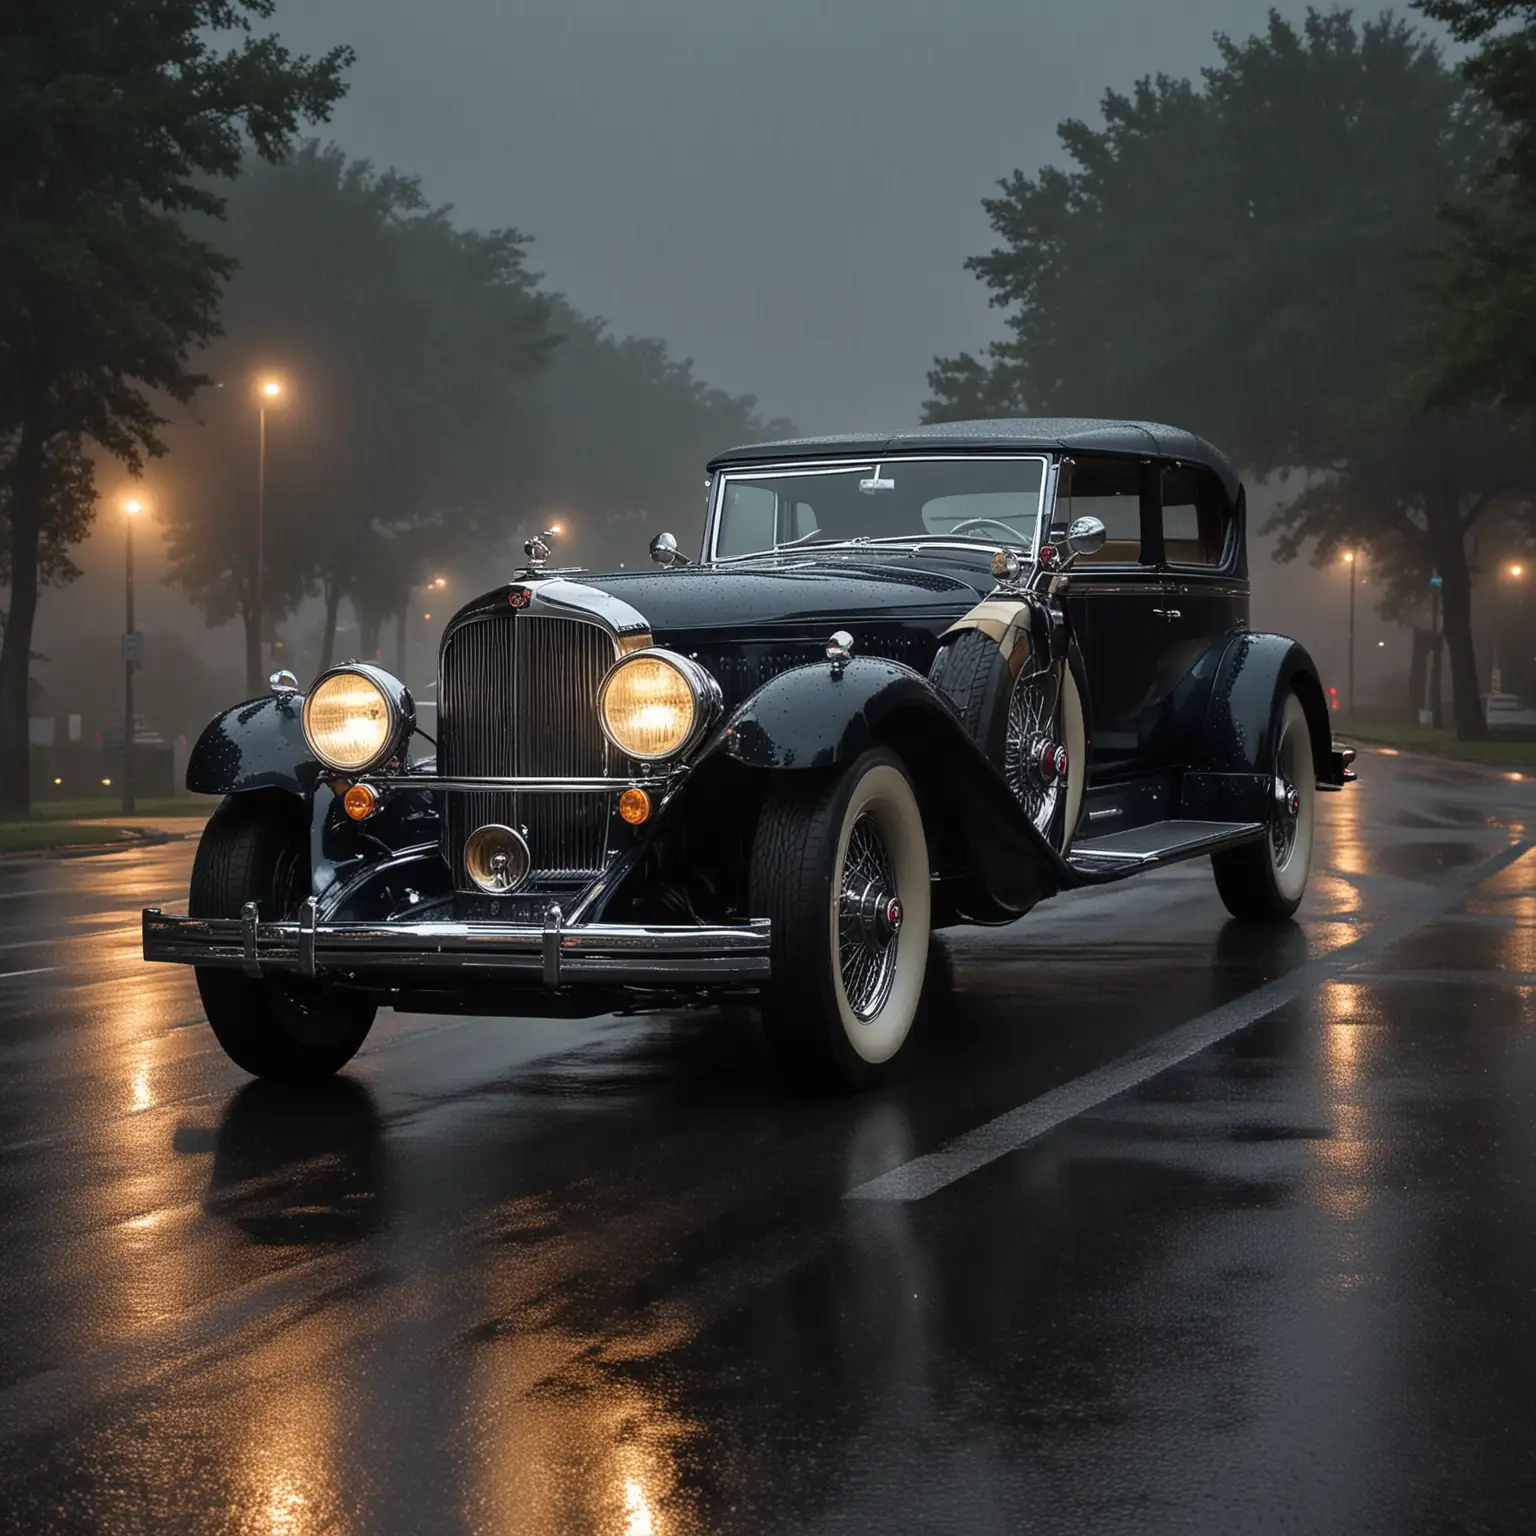 Vintage Duesenberg Car Driving Through Rainy Night